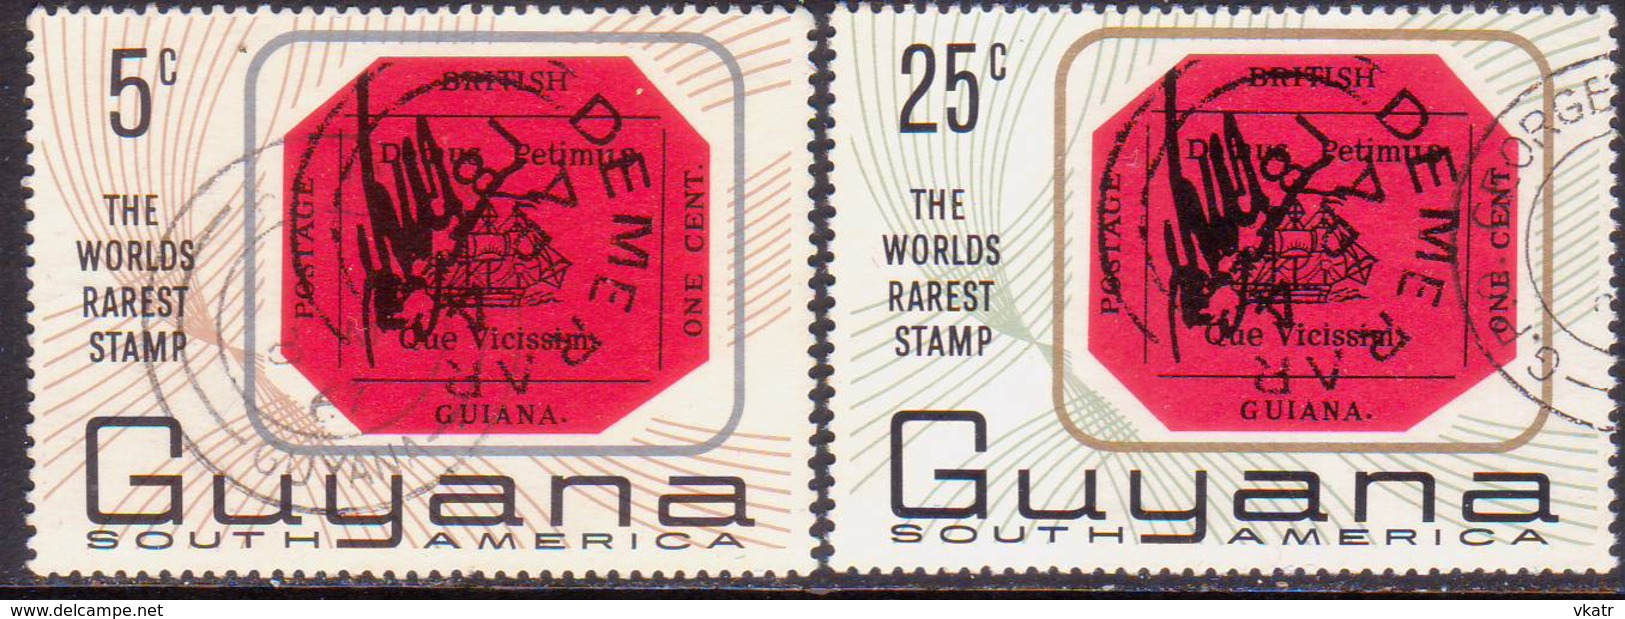 GUYANA 1967 SG 414-15 Compl.set Used World's Rarest Stamp - Guyana (1966-...)